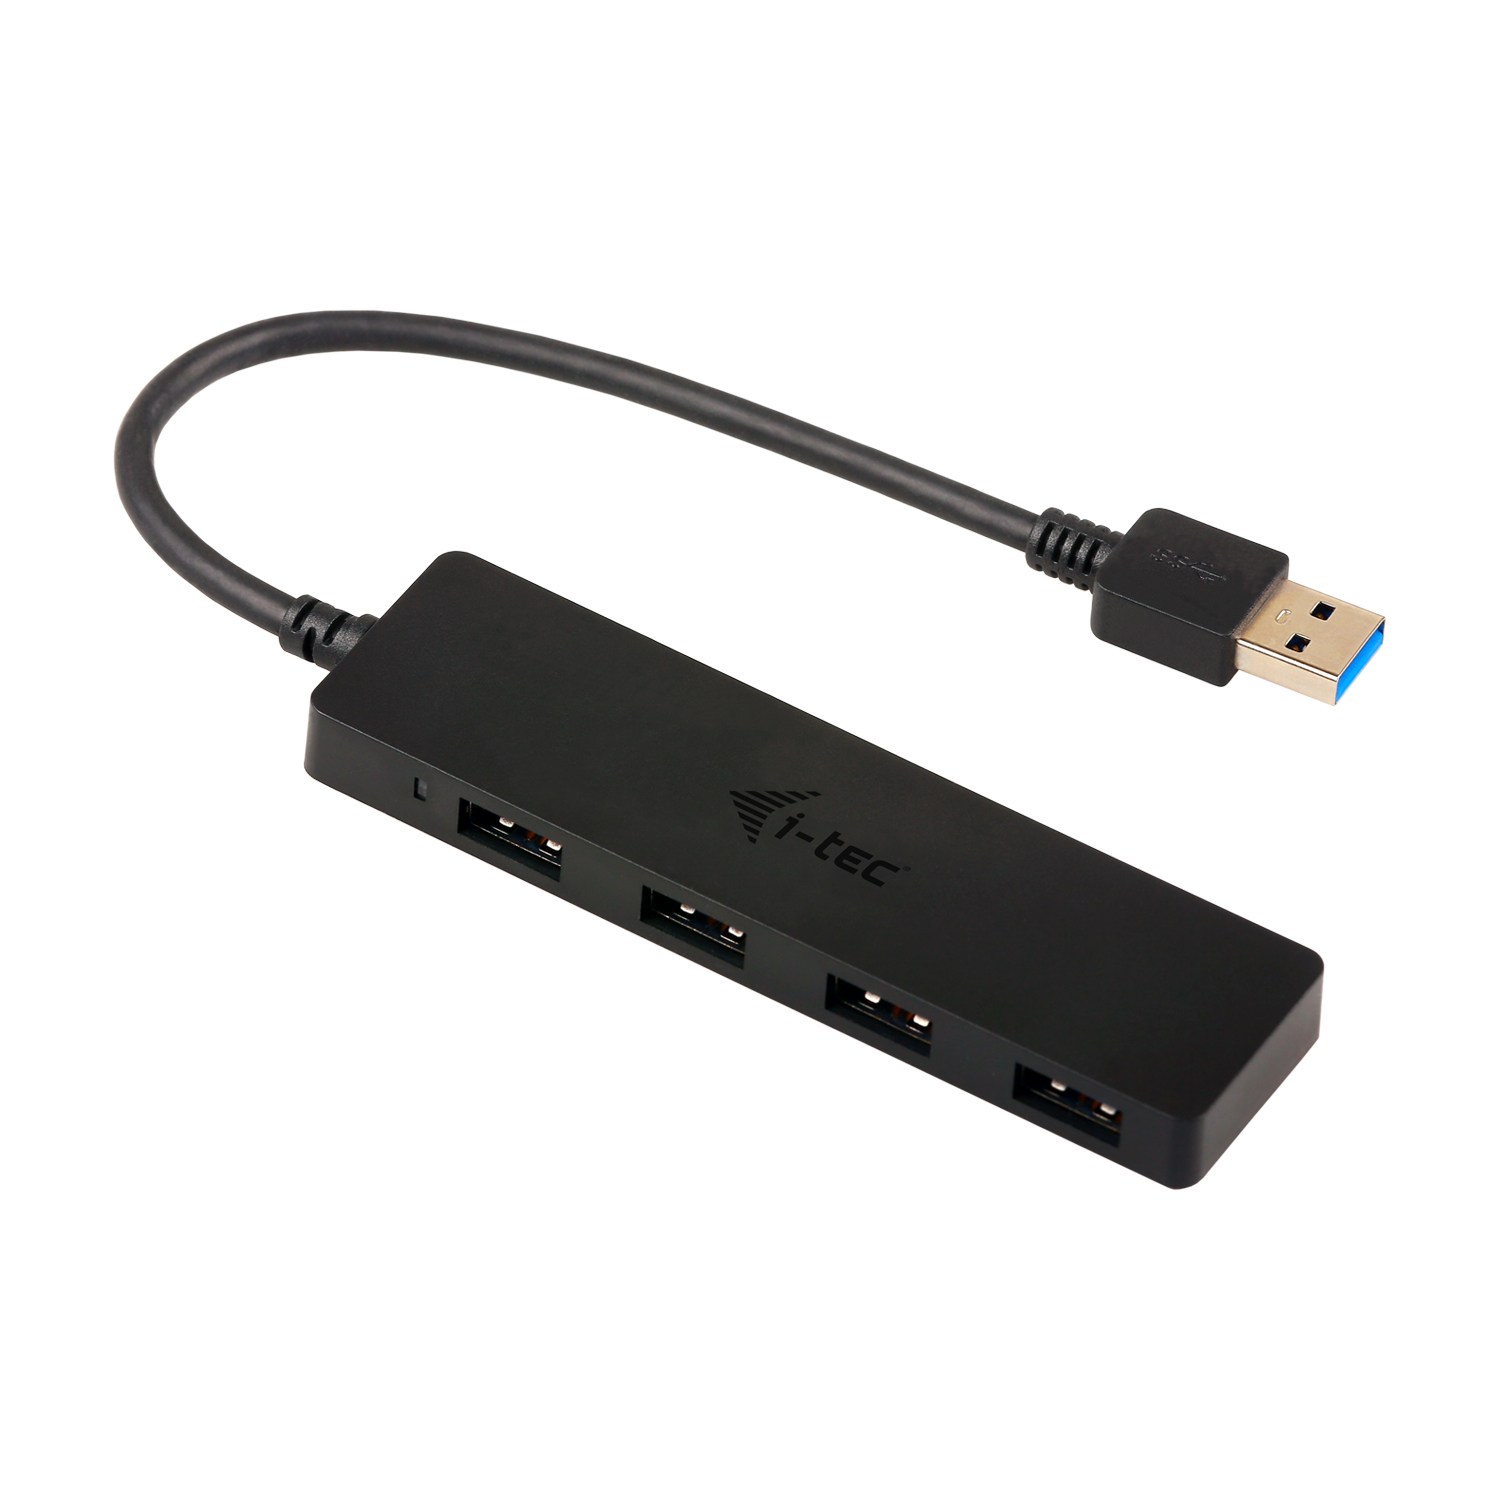 i-tec USB 3.0 SLIM HUB 4 Port passive – Black U3HUB404